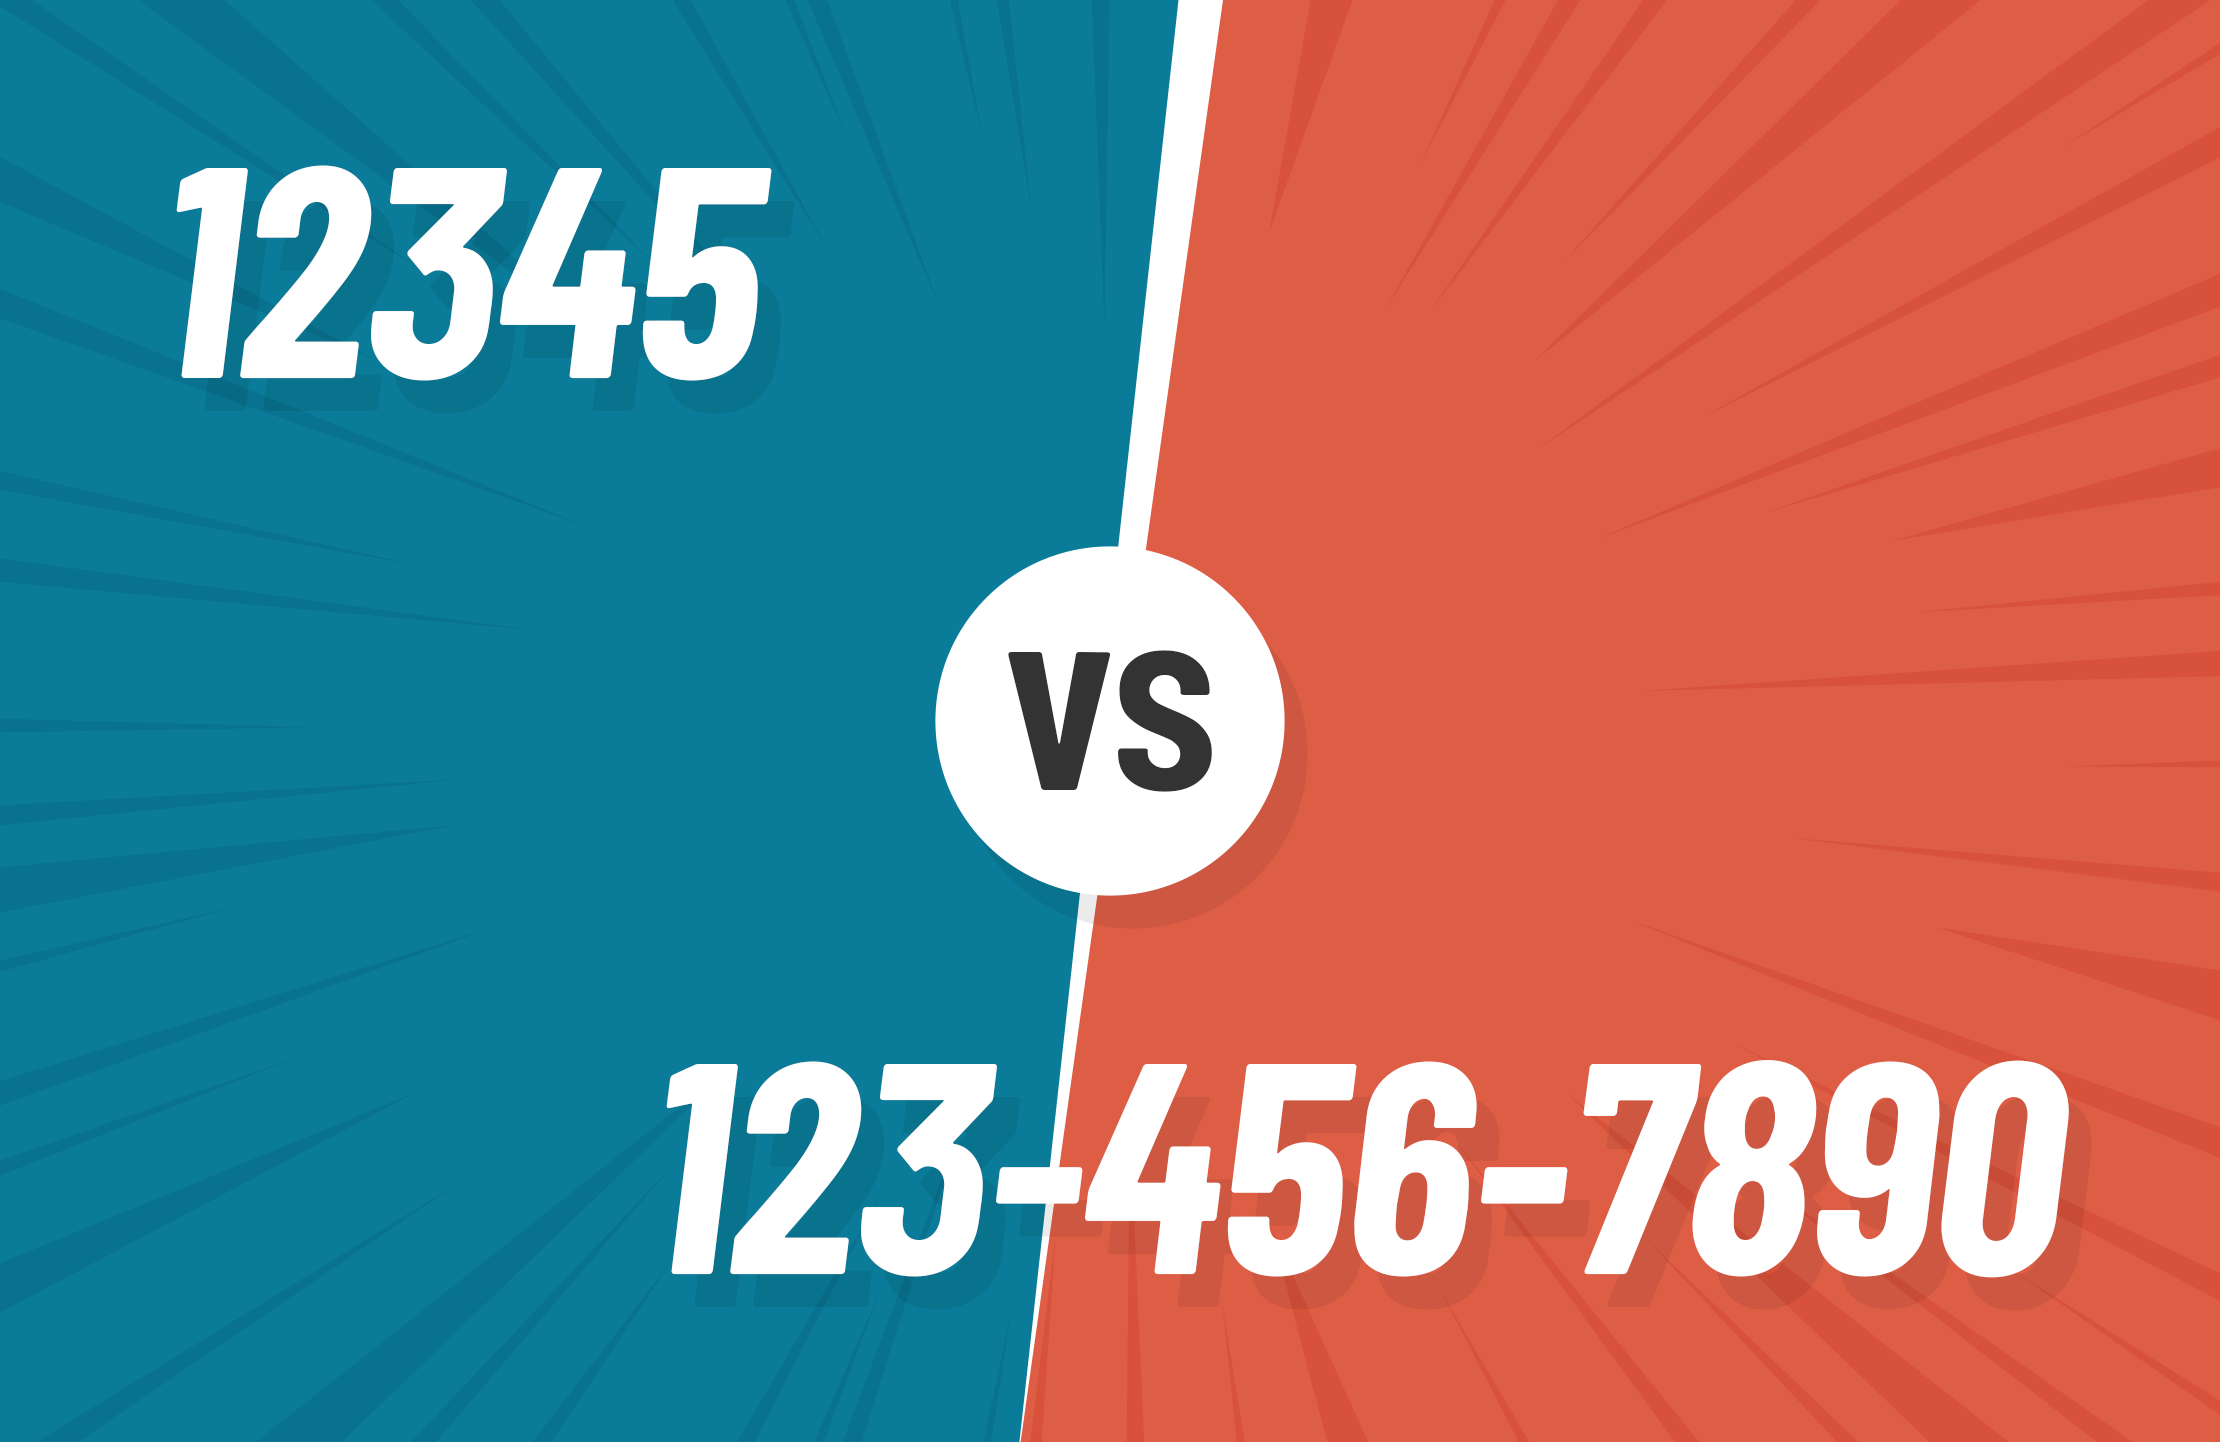 Image of 12345 short code vs 123-456-7890 10DLC phone number